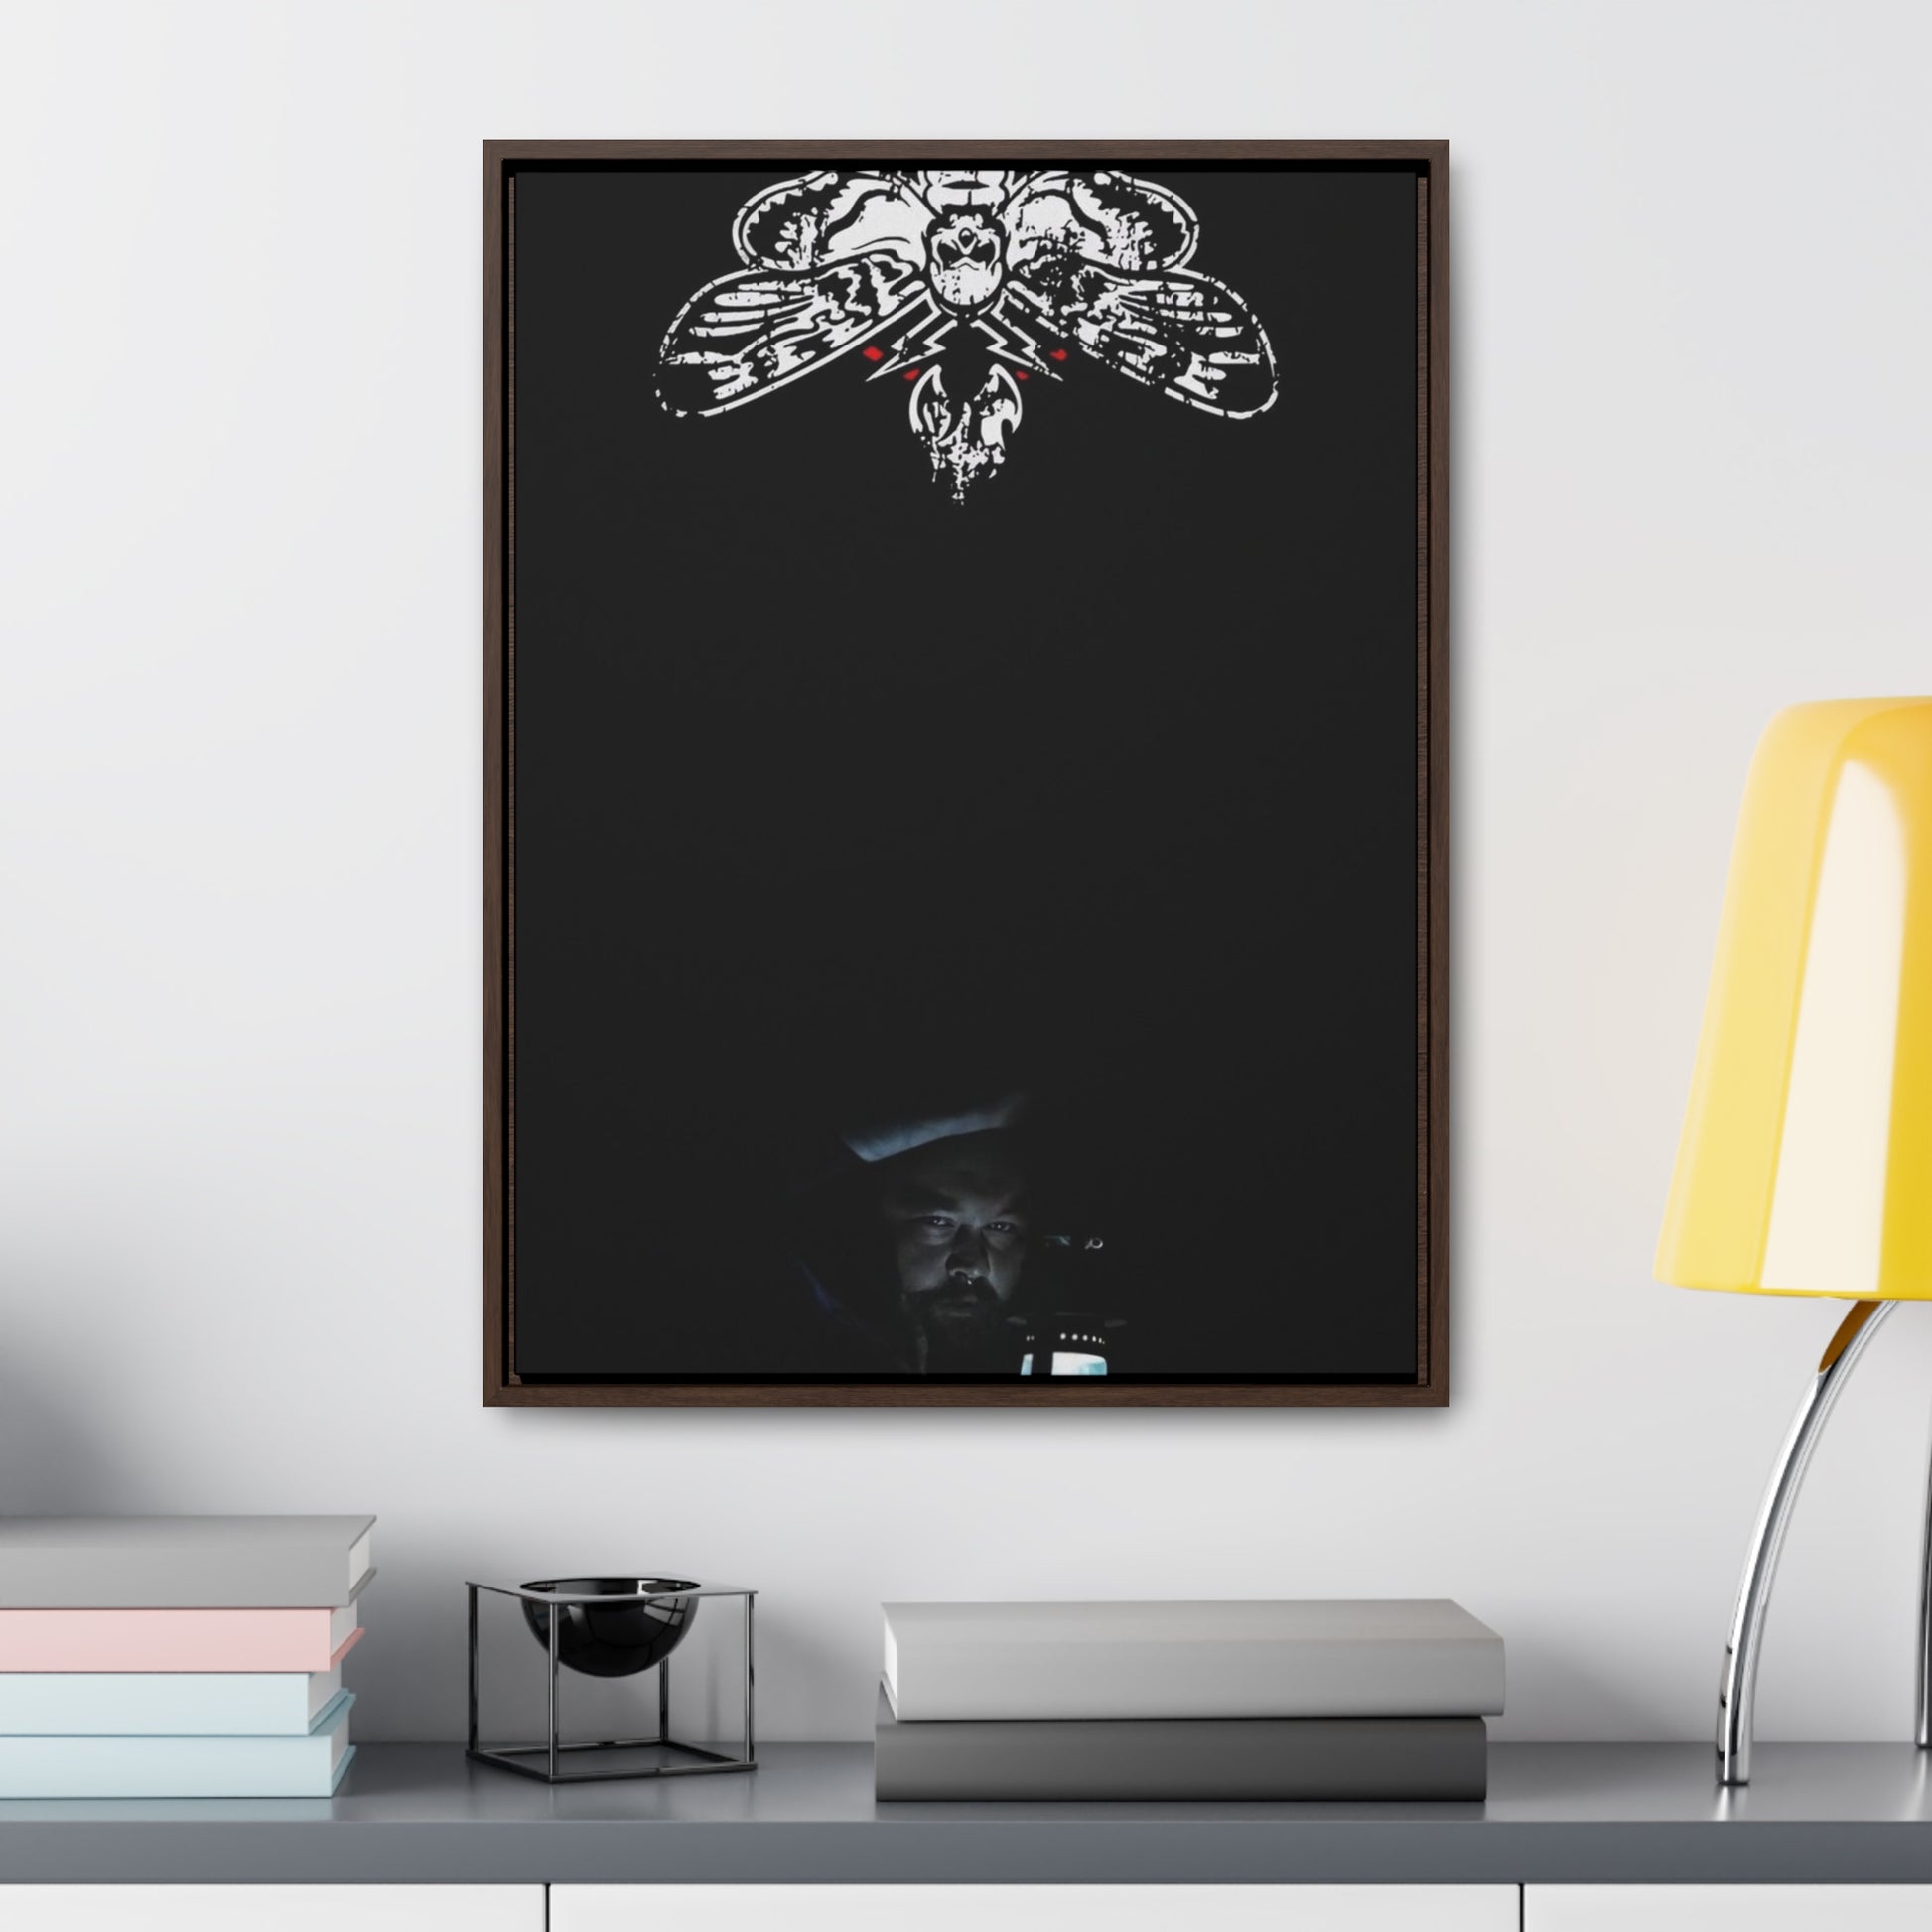 Gallery Canvas Wraps, Vertical Frame Bray Wyatt